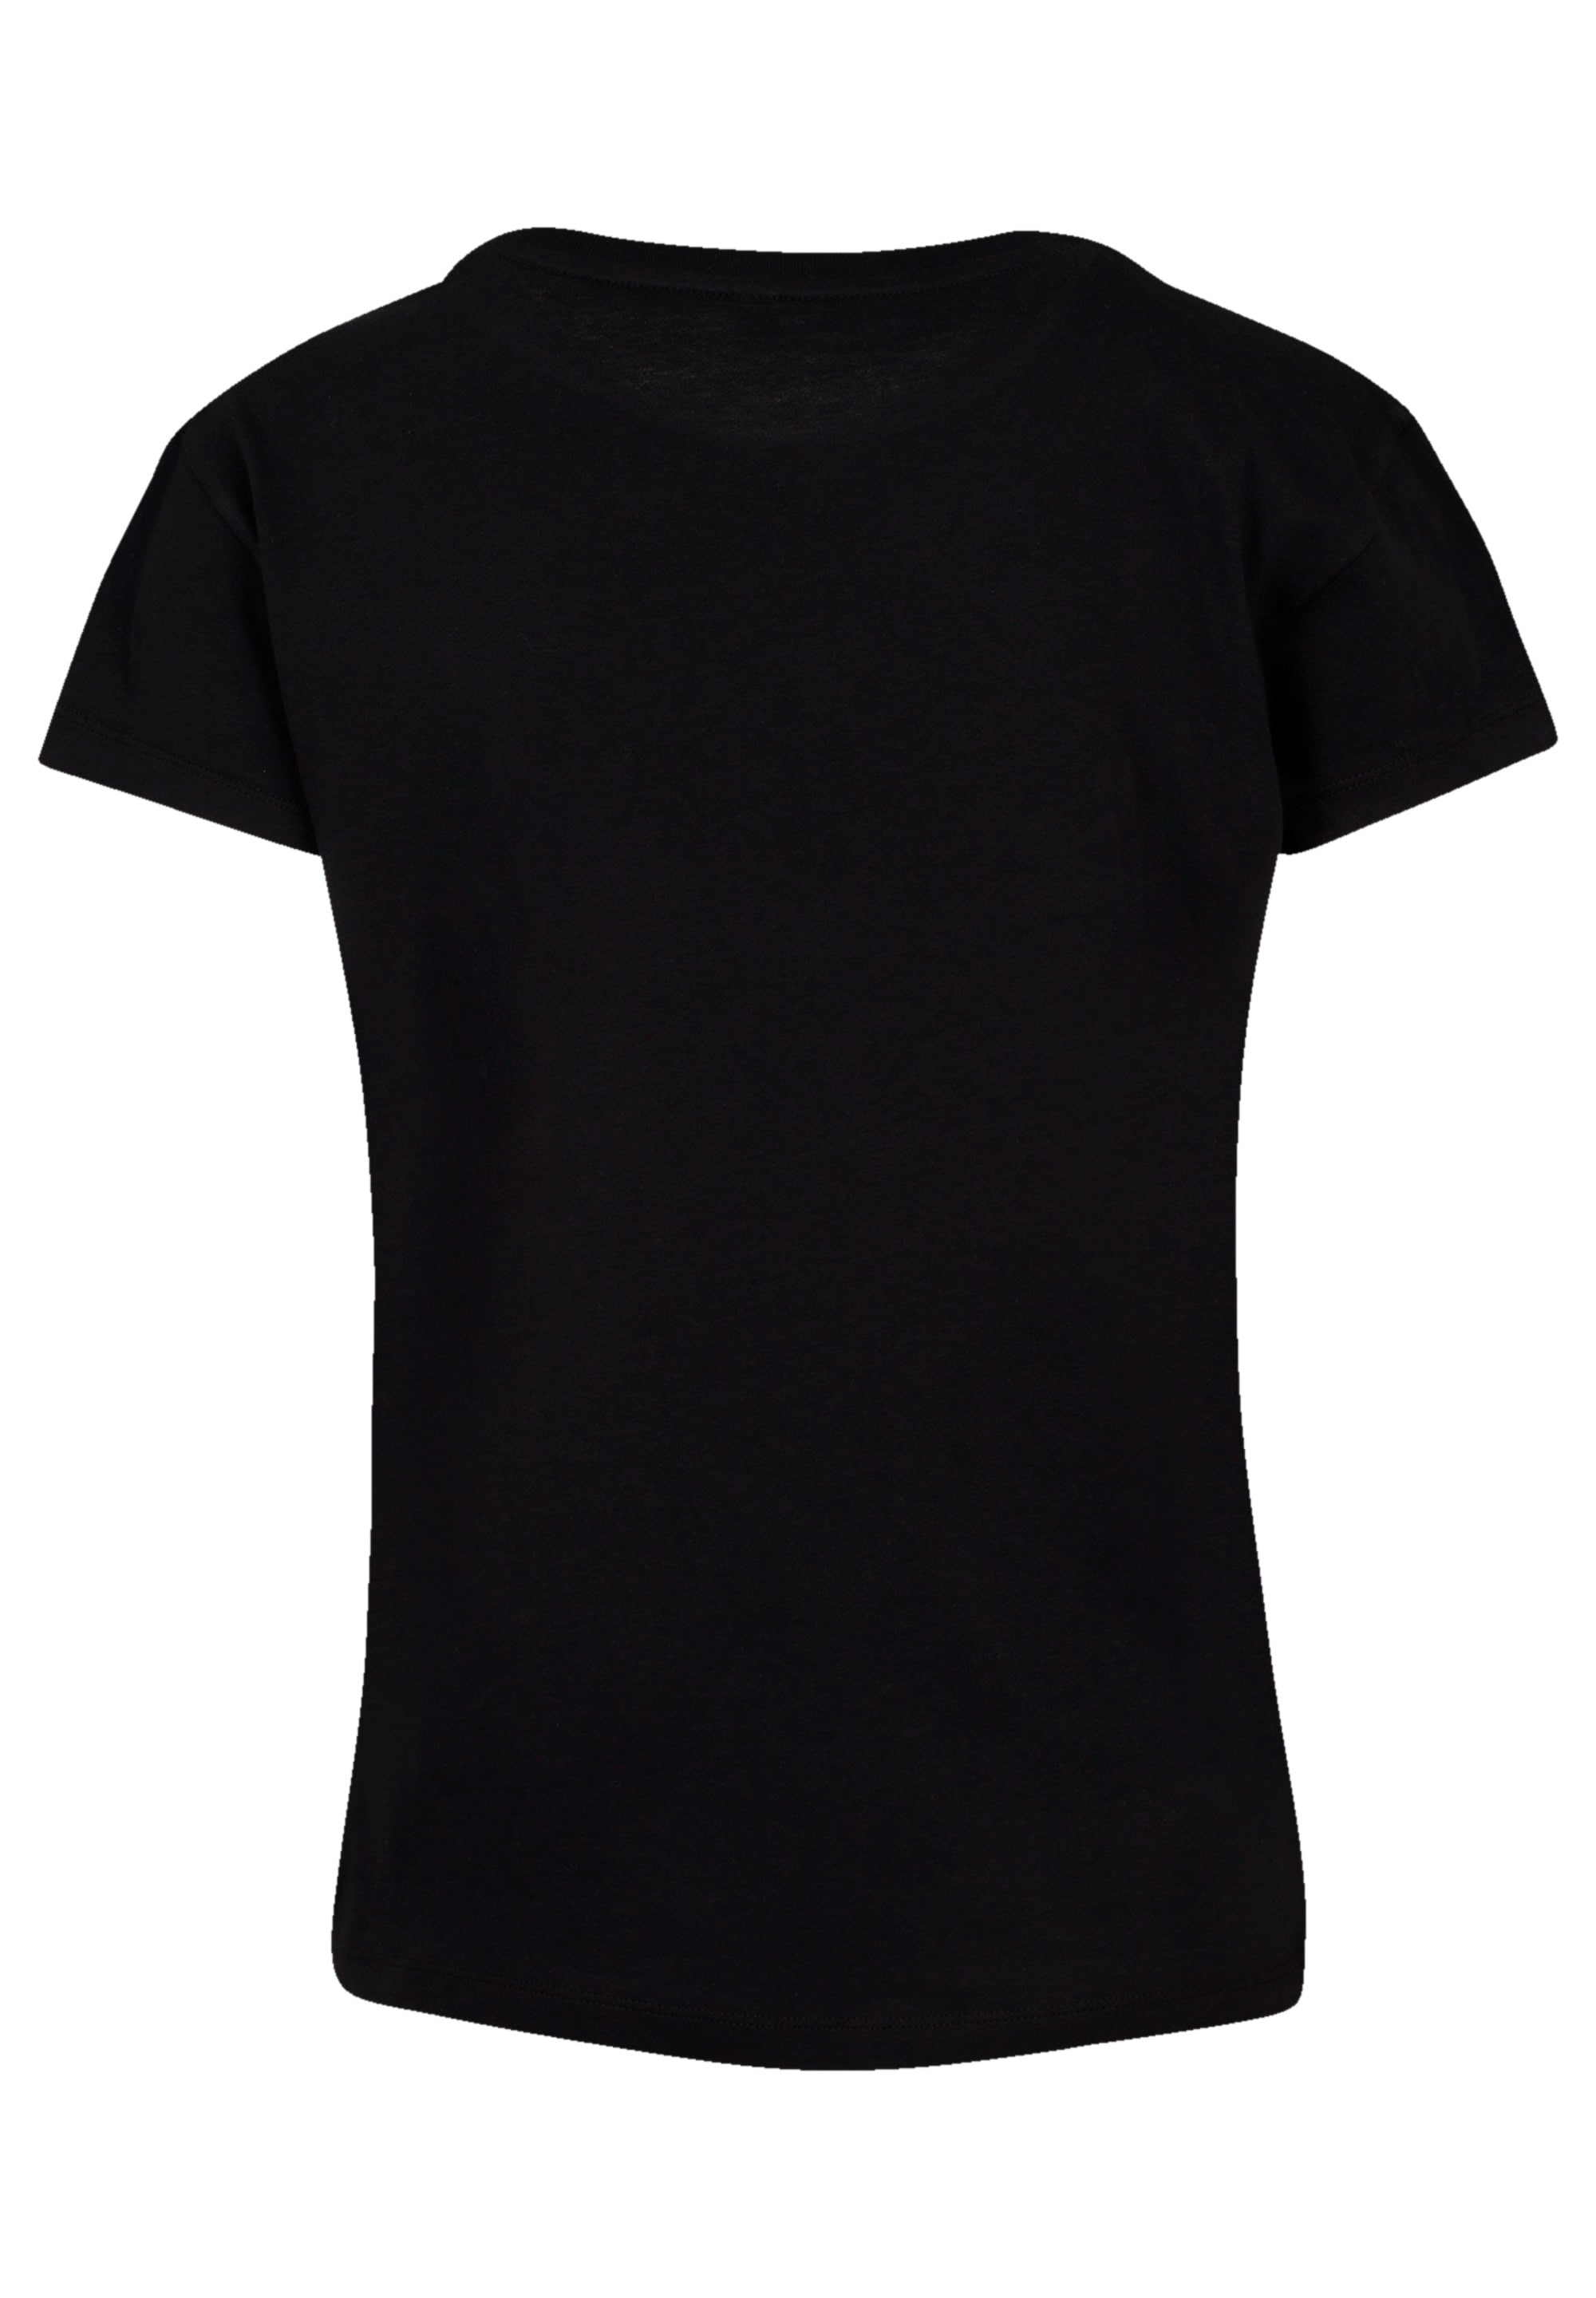 F4NT4STIC T-Shirt »Queen Classic Crest«, Print kaufen | BAUR